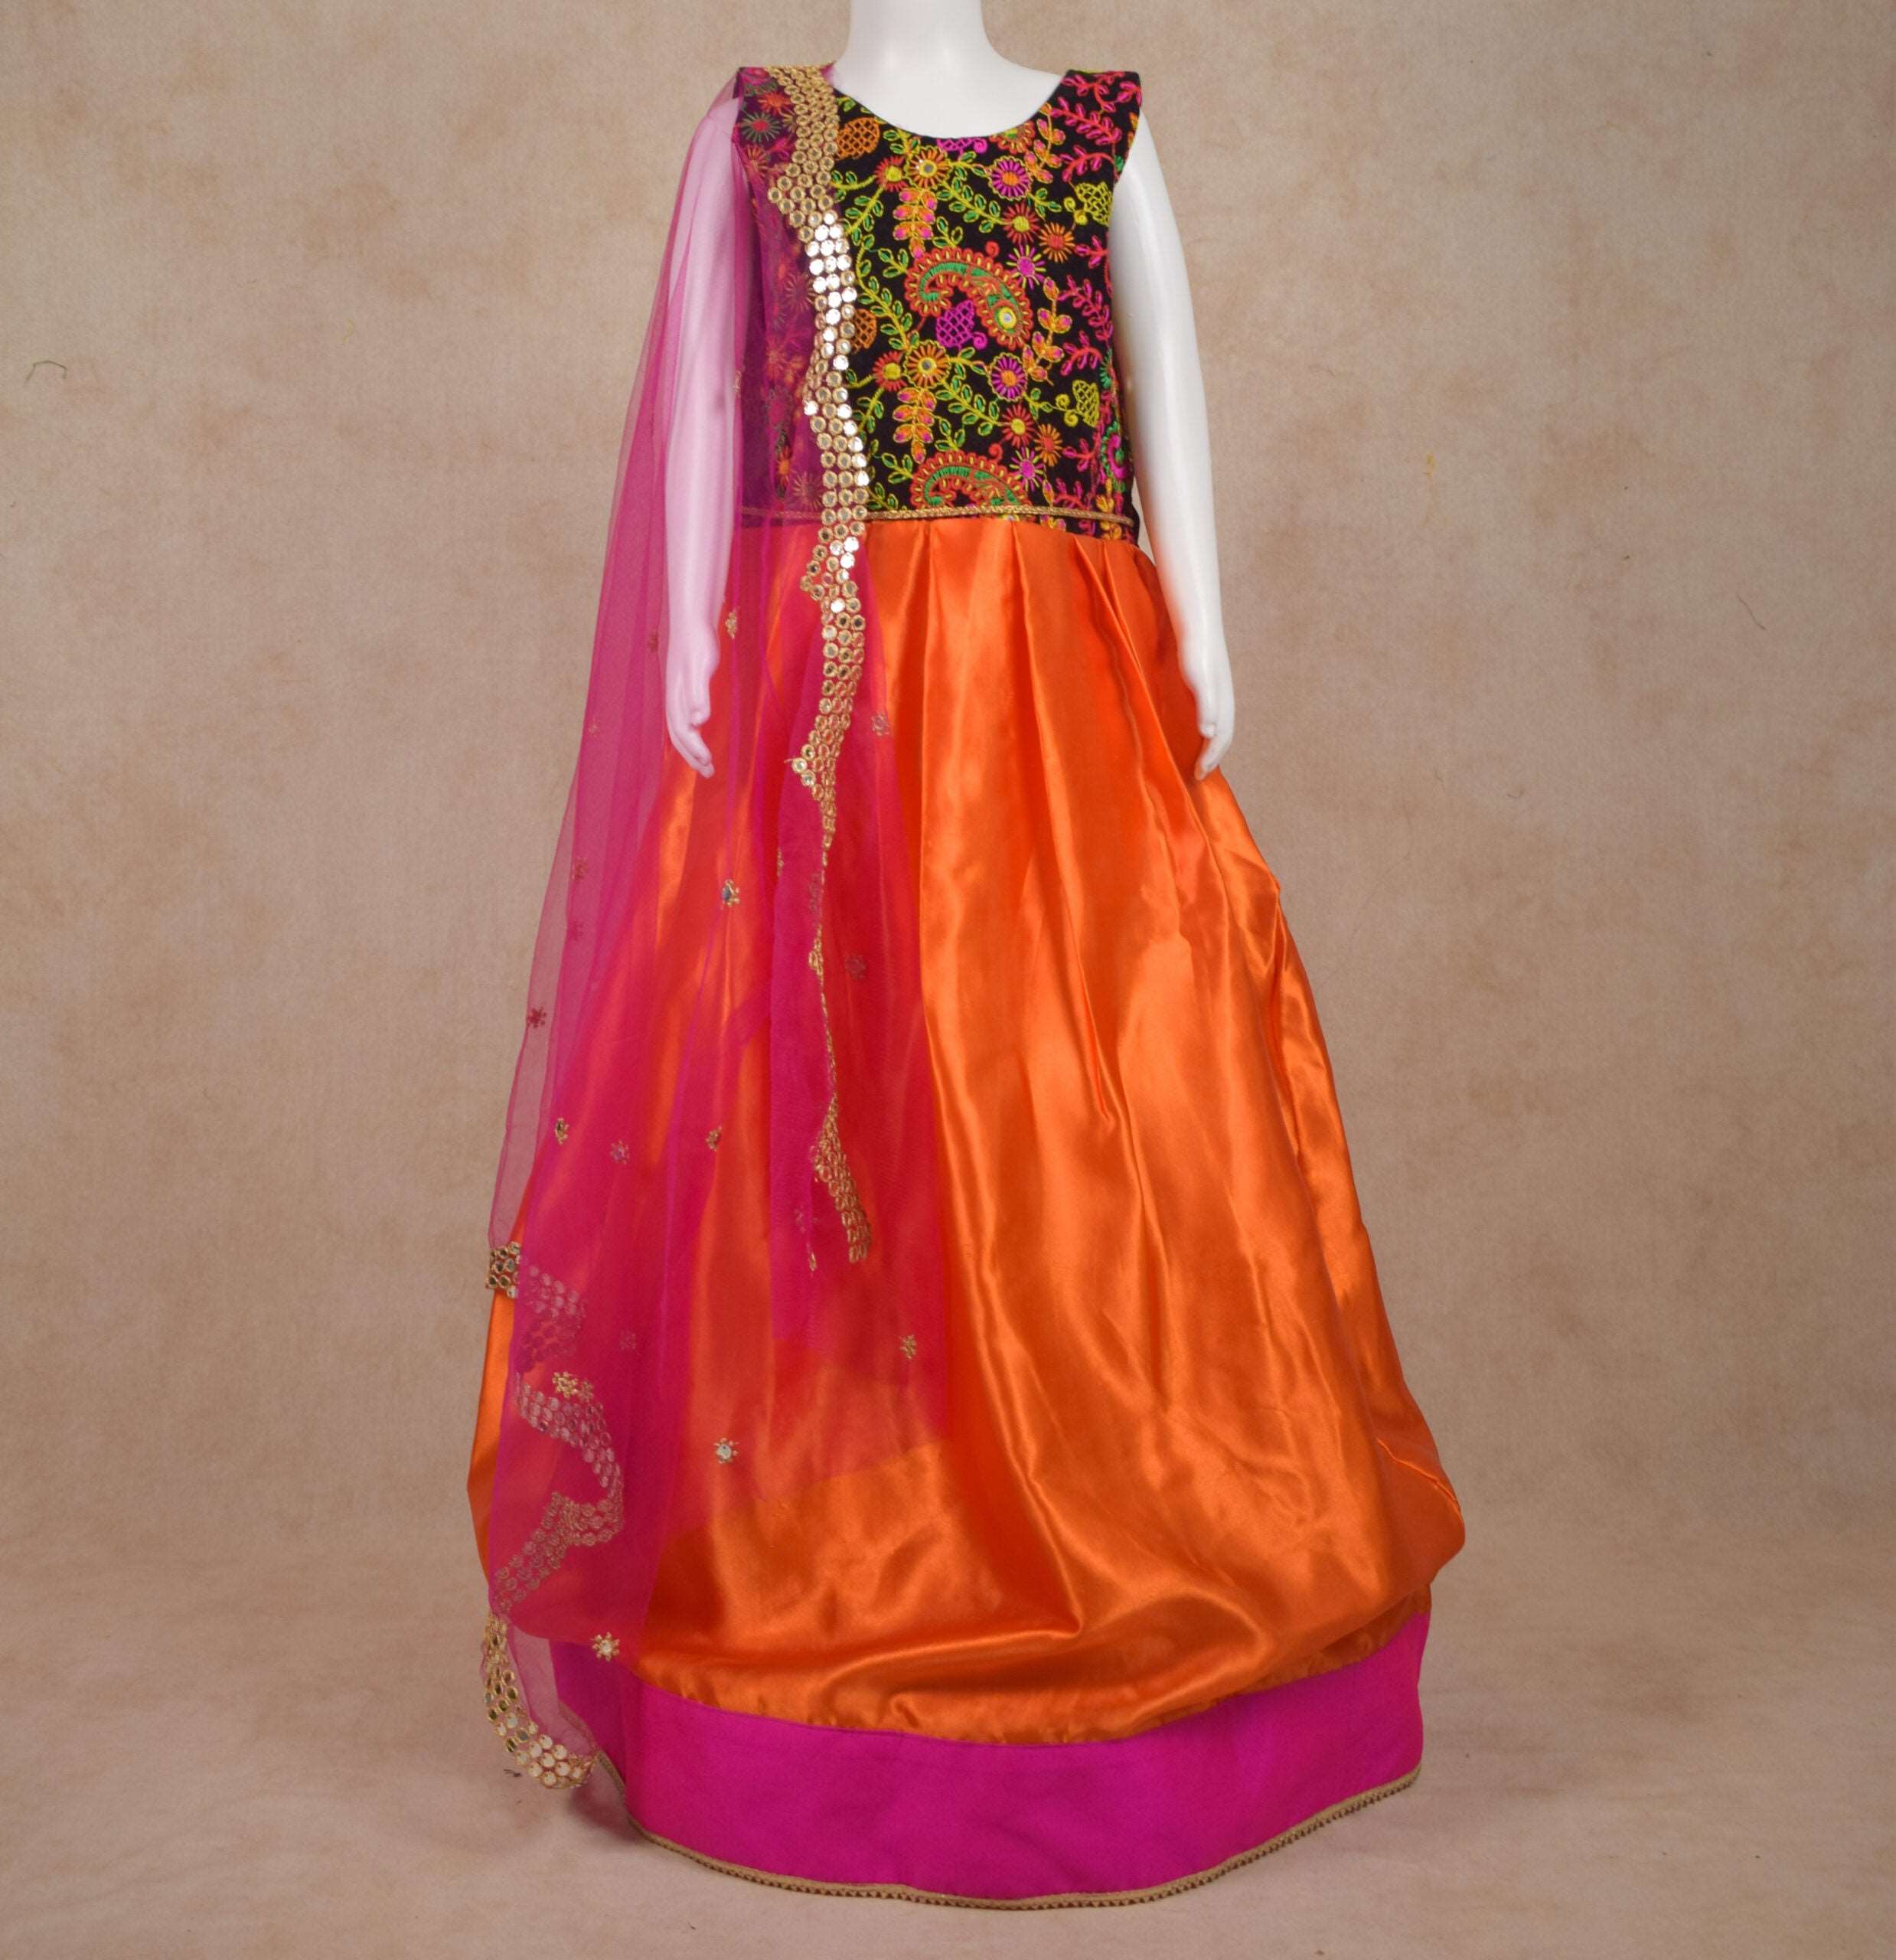 10 Wedding Dress Ideas For Girls Attending Their Best Friend's Wedding –  India's Wedding Blog